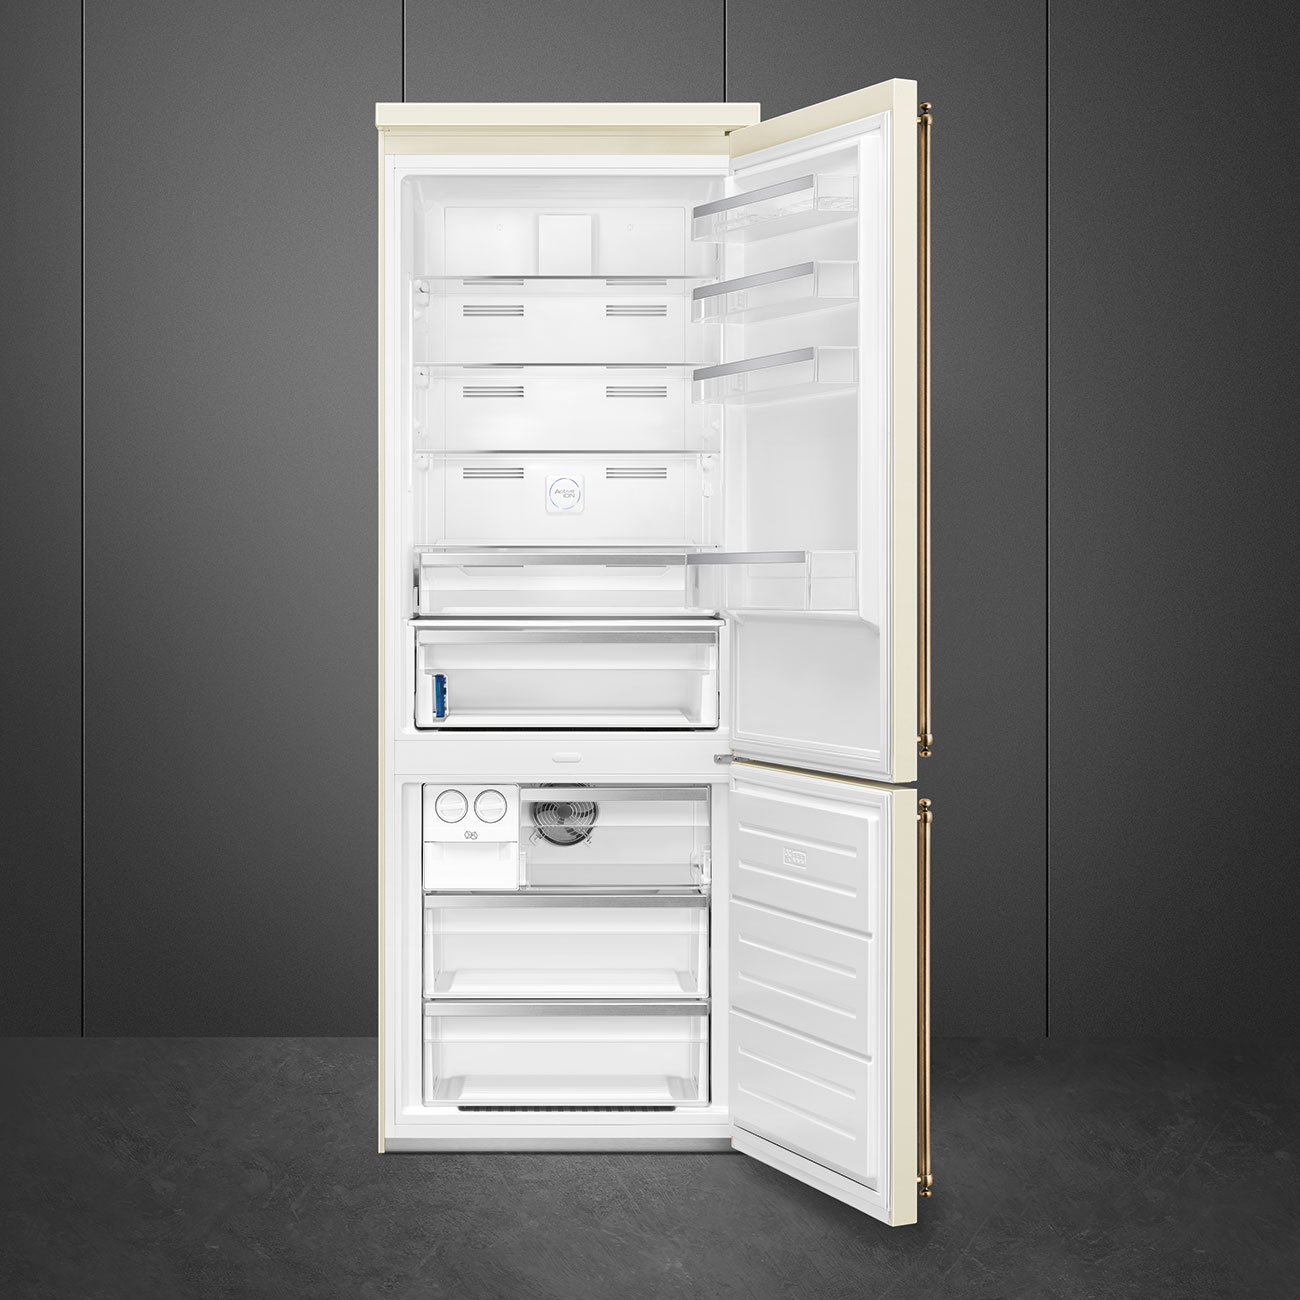 Холодильник Smeg FA8005RPO5 цена 132200.00 грн - фотография 2